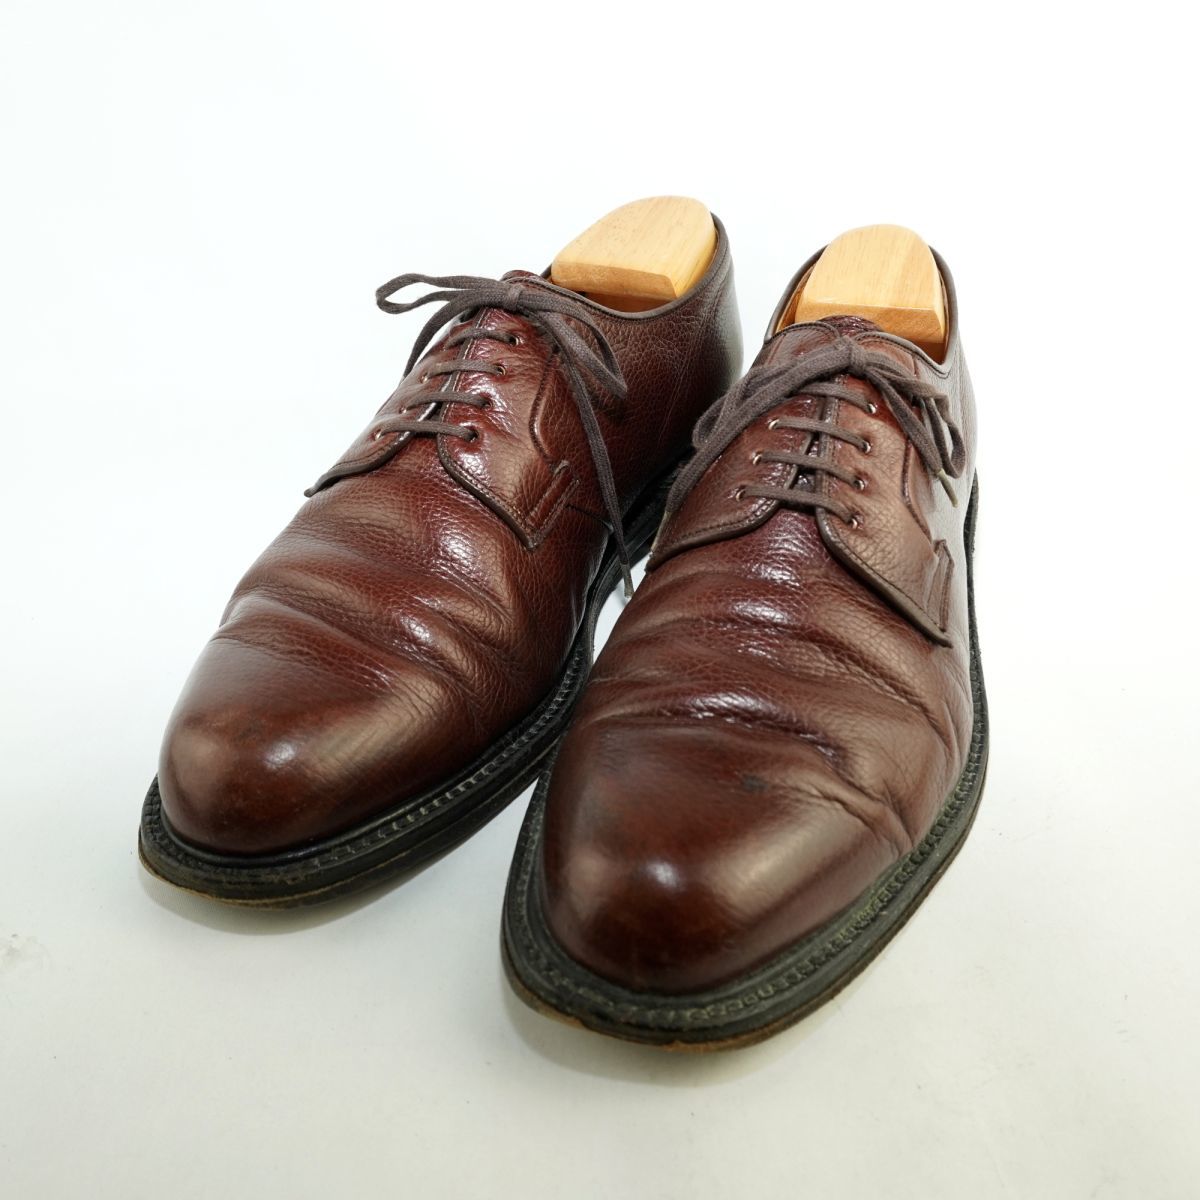 Jarman shoes for men ジャーマン 25 1/2 25.5 革靴 ビジネスシューズ 外羽根式 メンズ レザー 本革 茶色 ブラウン/EC60_画像1